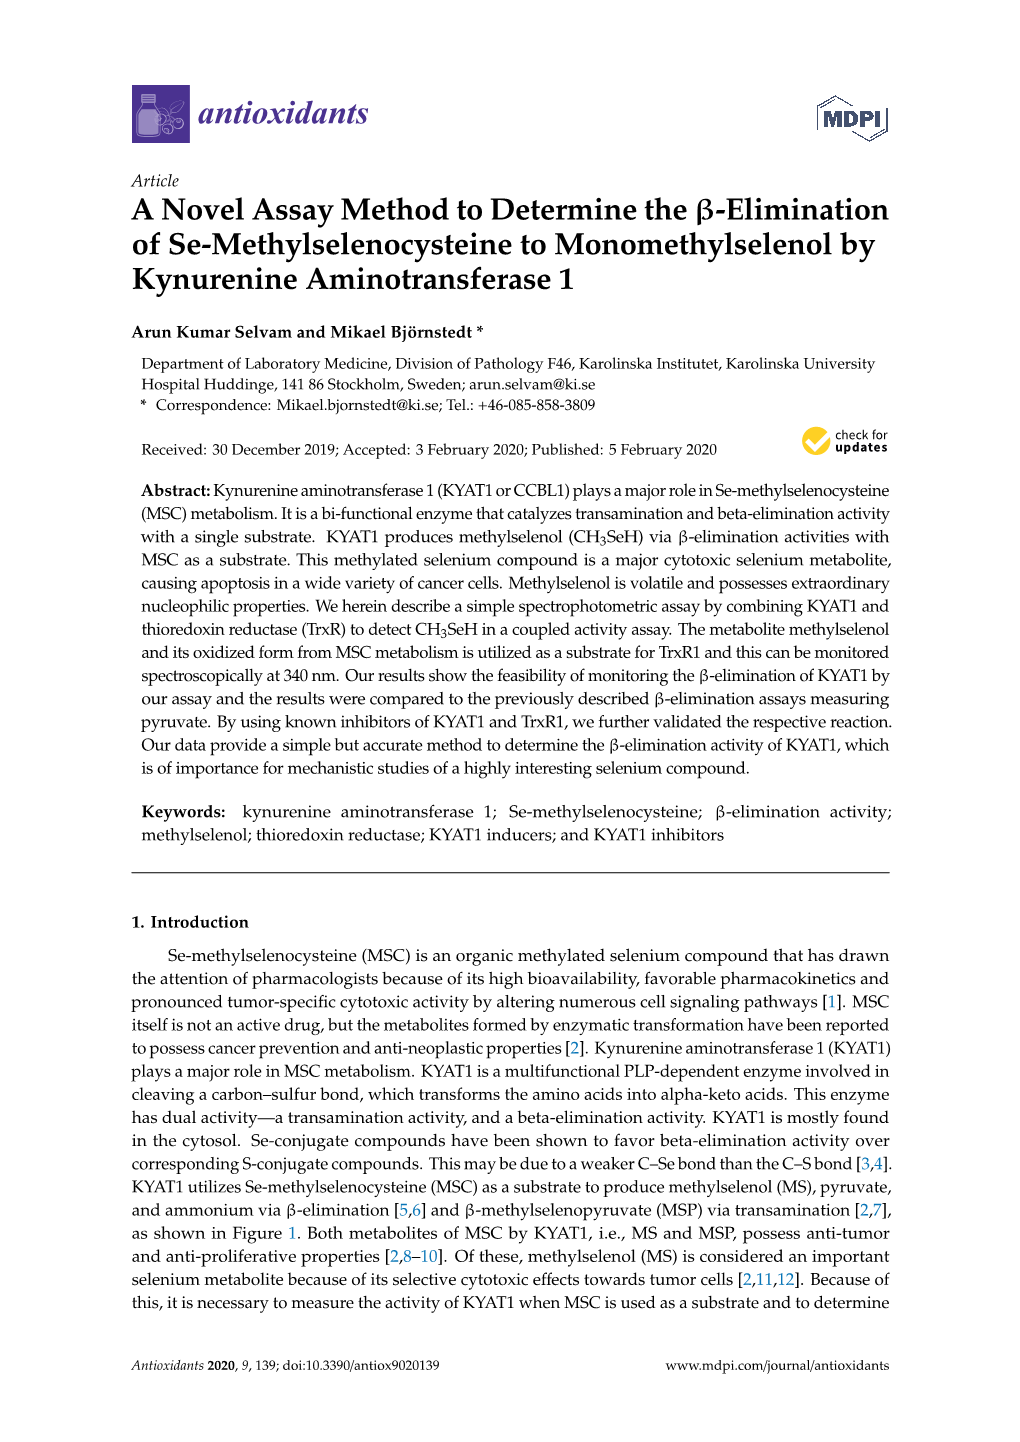 A Novel Assay Method to Determine the Β-Elimination of Se-Methylselenocysteine to Monomethylselenol by Kynurenine Aminotransferase 1